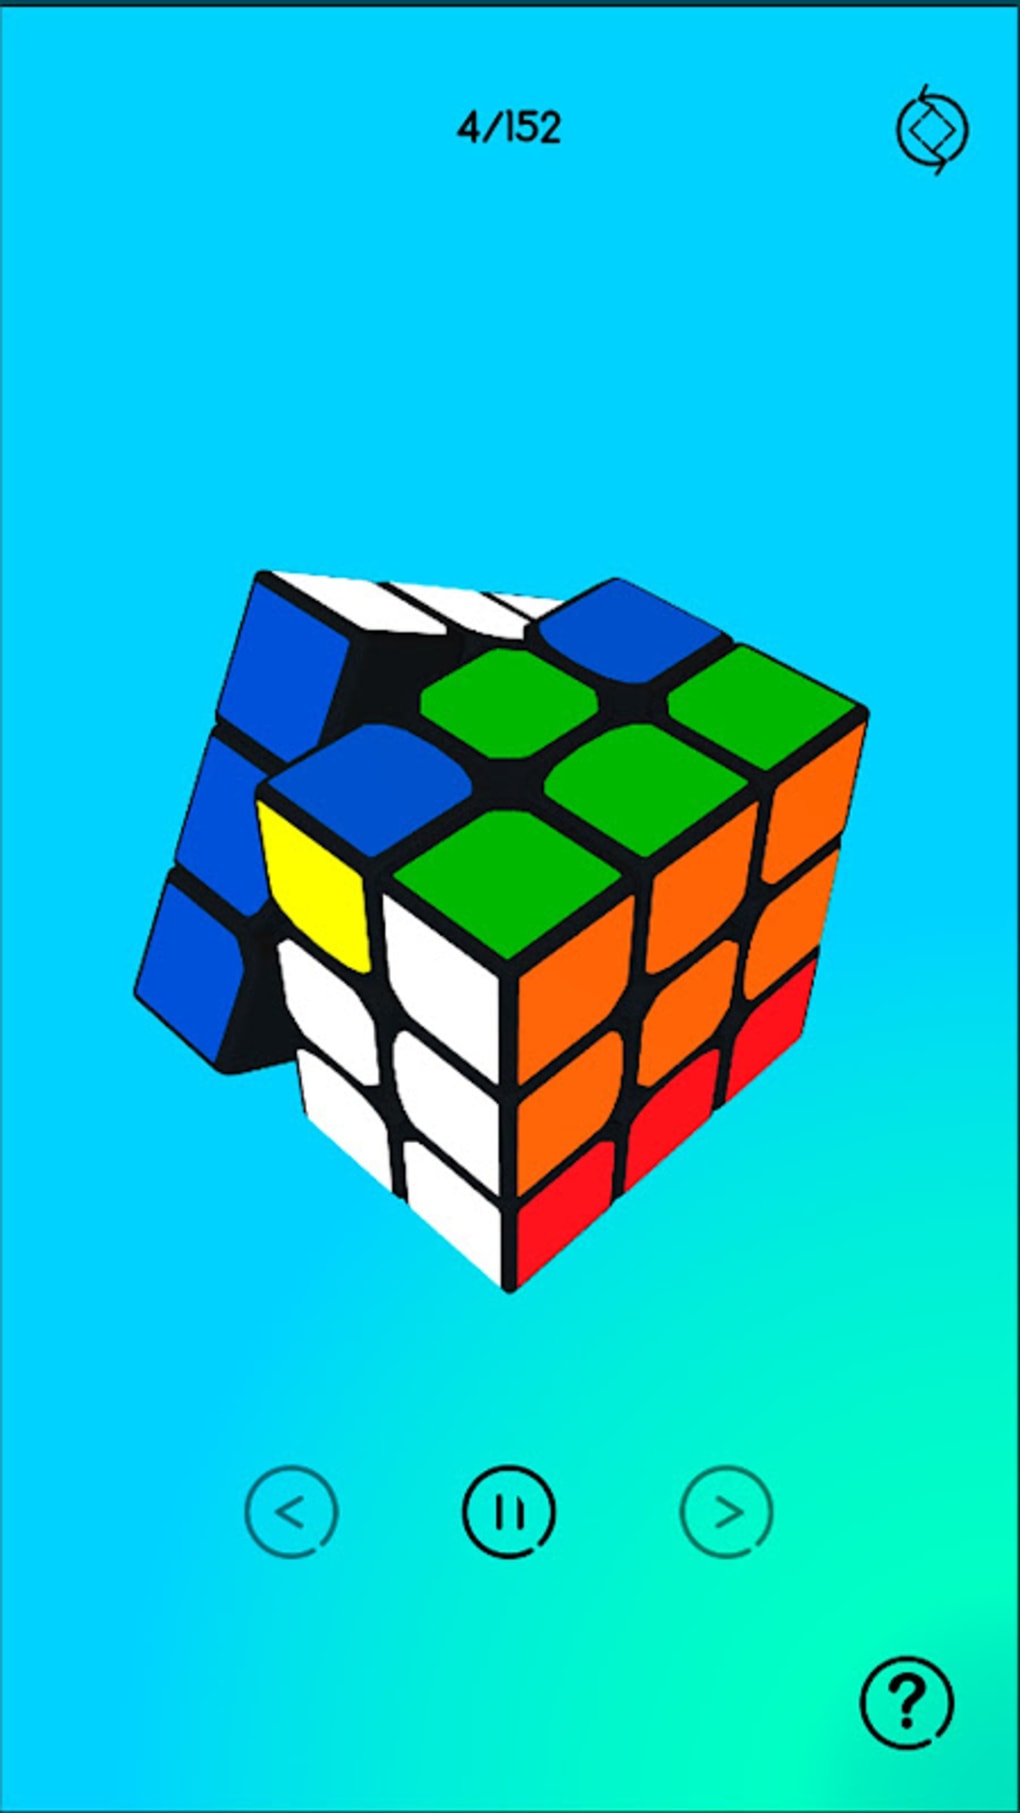 Solucionador de Cubos de Rubik